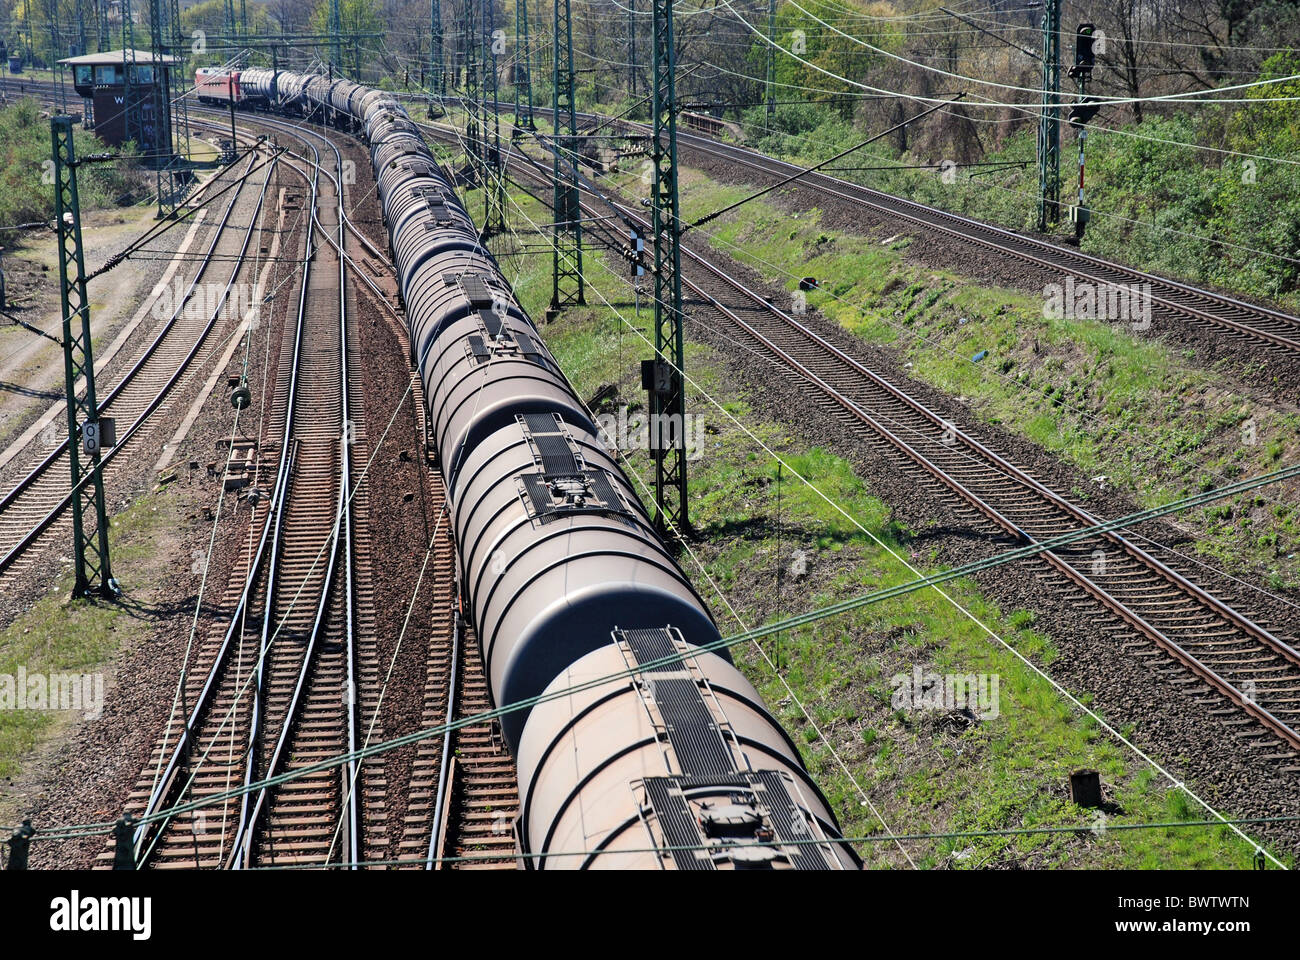 Railway Railroad Cargo Deutsche Bahn AG Germany Europe electricity energy Europe moving journey locomotion Stock Photo